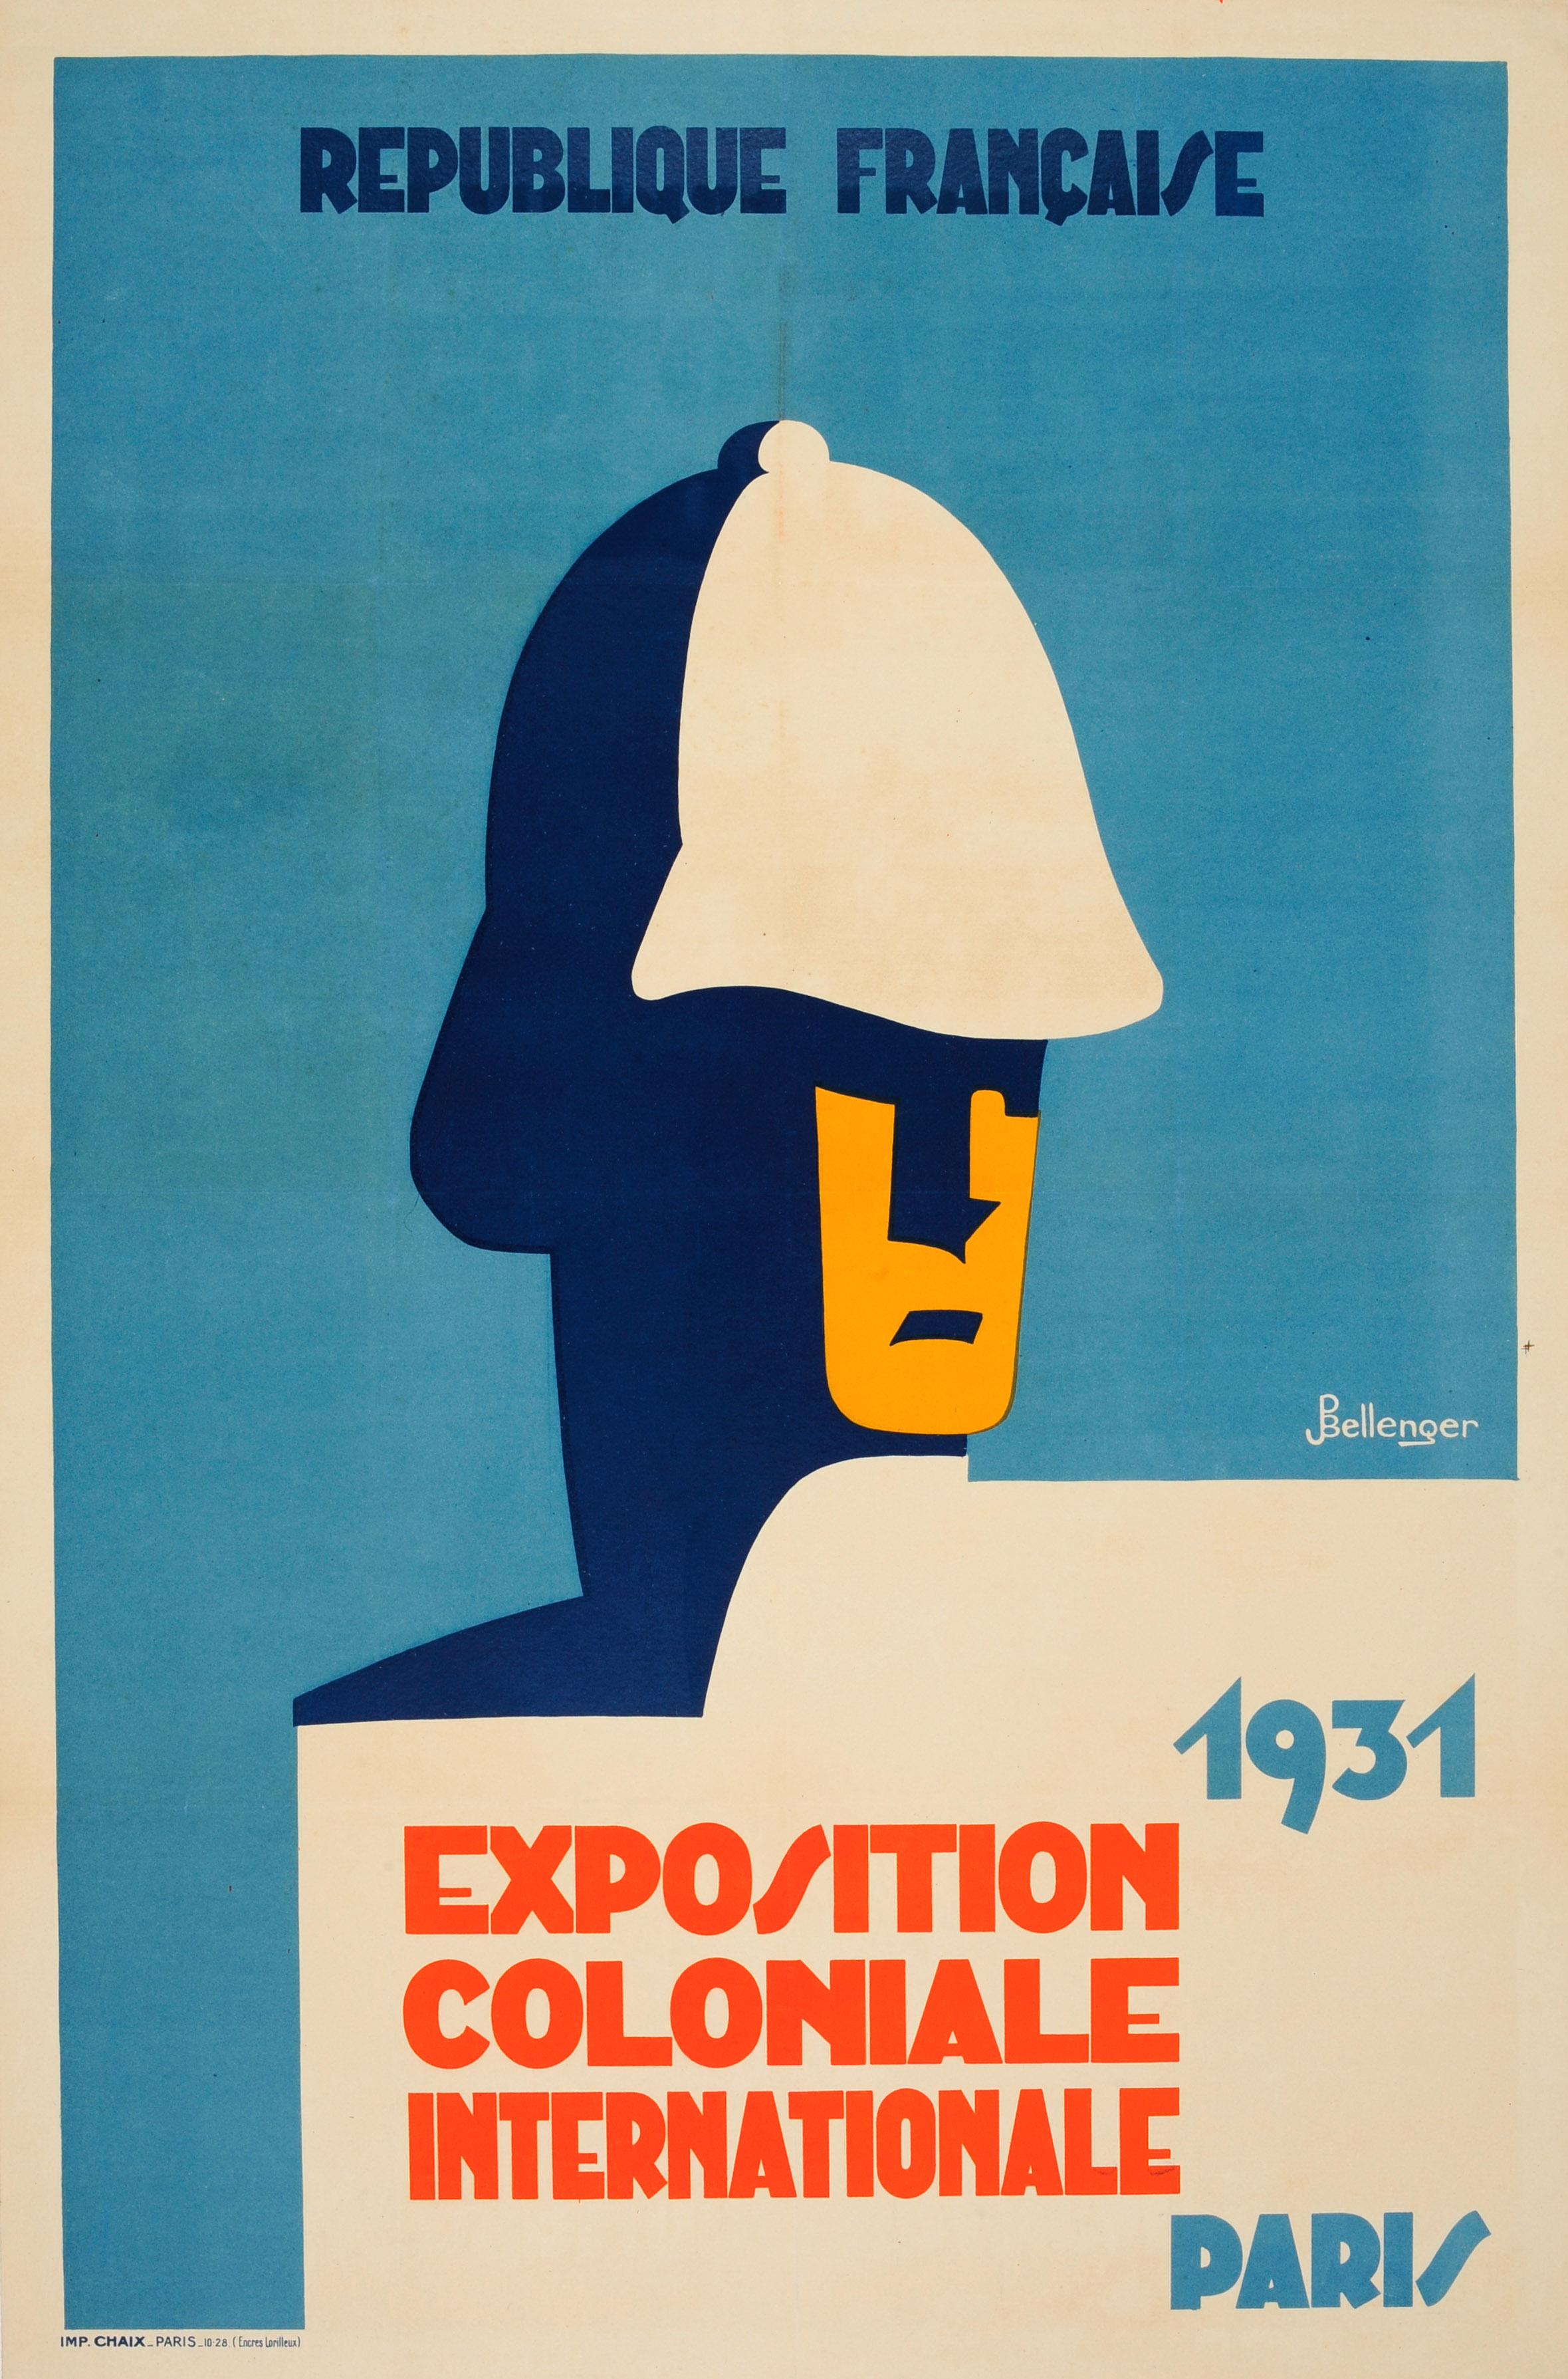 Pierre and Jacques Bellenger Print - Original Vintage Art Deco Poster 1931 International Colonial Exhibition In Paris